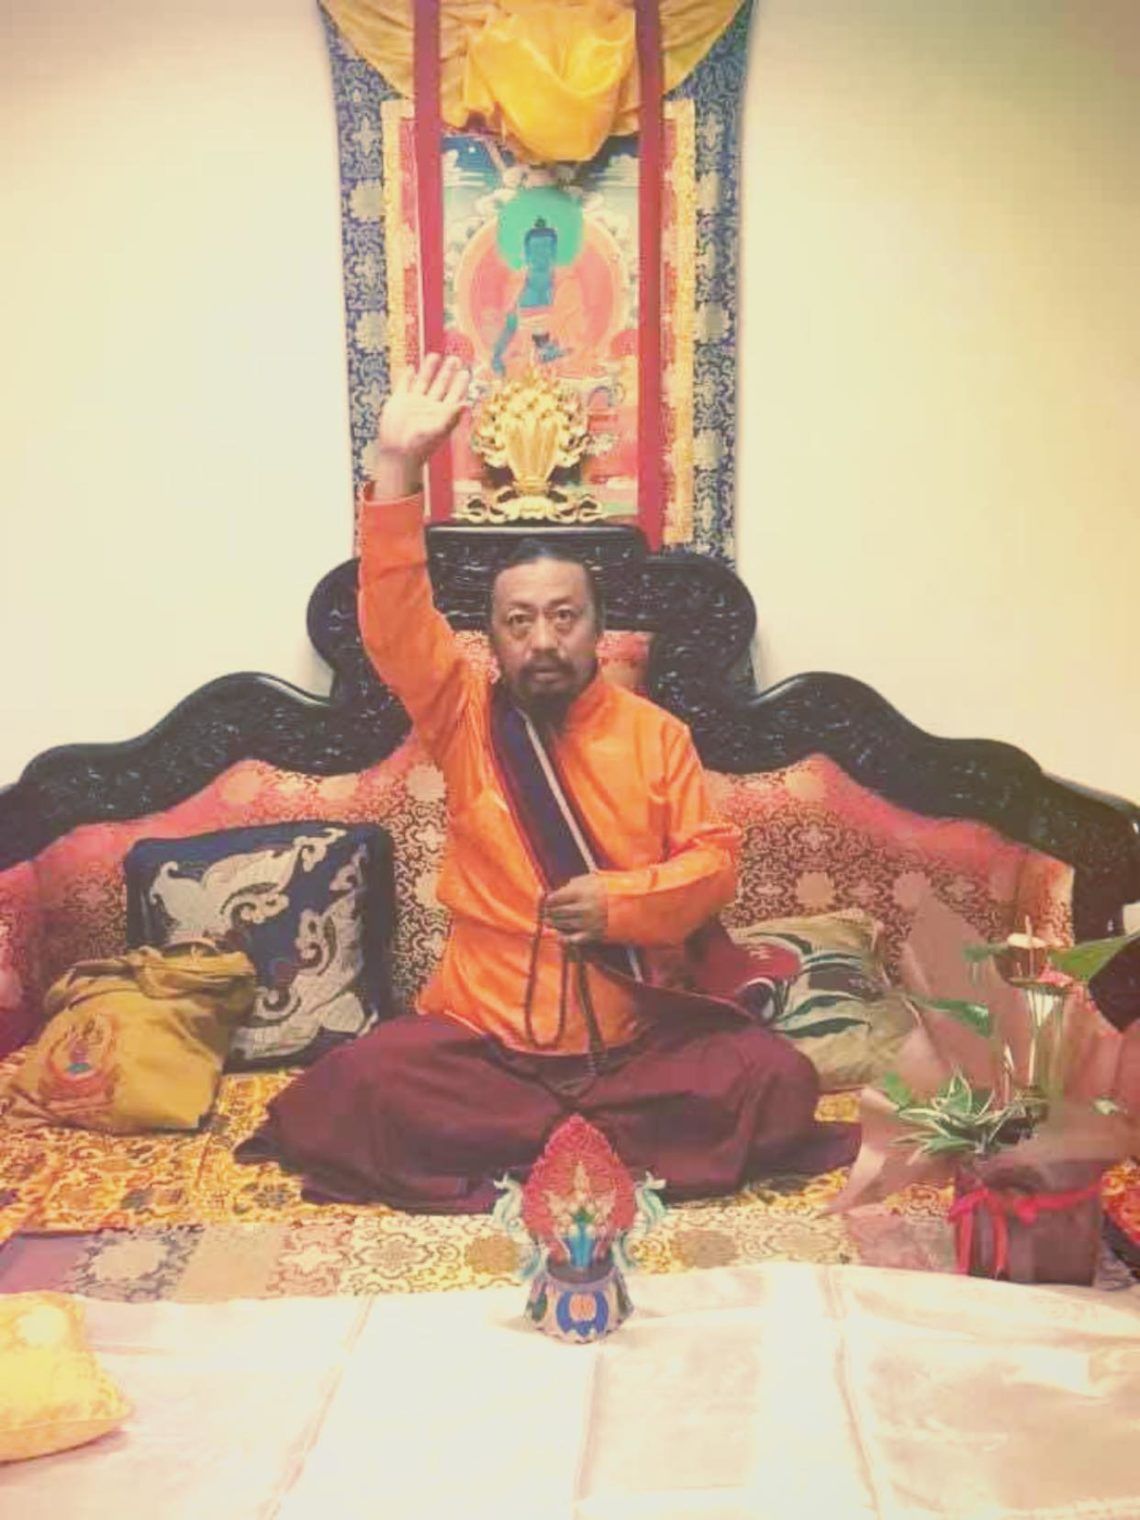 39th Awam Monlam Chenmo and the 2nd anniversary of the Parinirvana of Urgen Drolma Lama